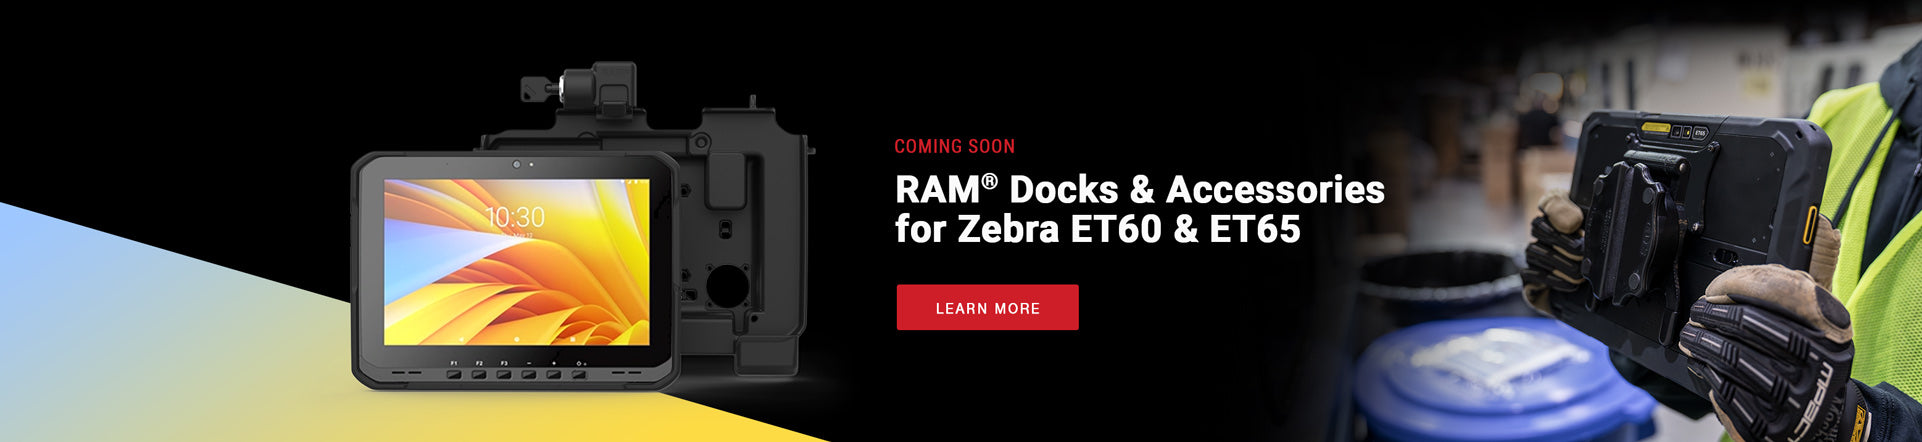 Homepage Image banner featuring RAM docks coming soon for Zebra ET60 & ET65 